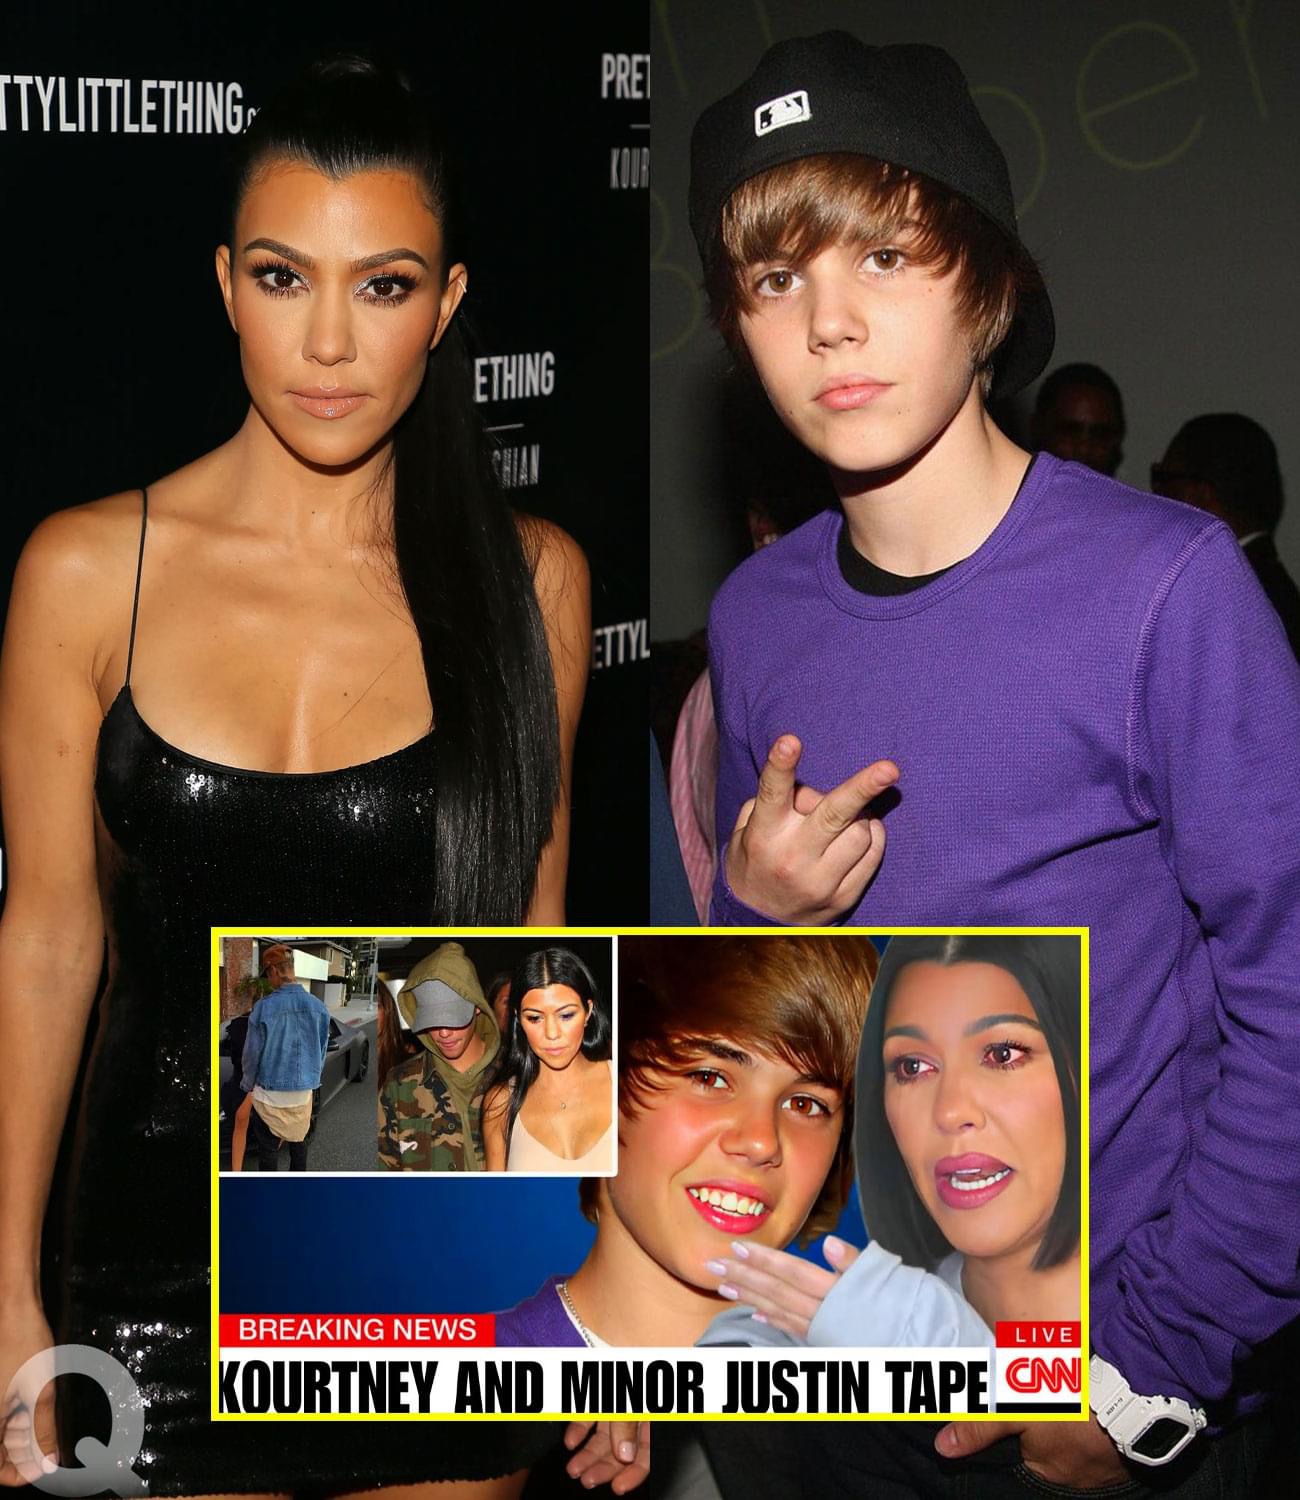 7 MINUTES AGO: Feds expose Kourtney Kardashian’s XTAPE SECRET with Justin Bieber as a minor